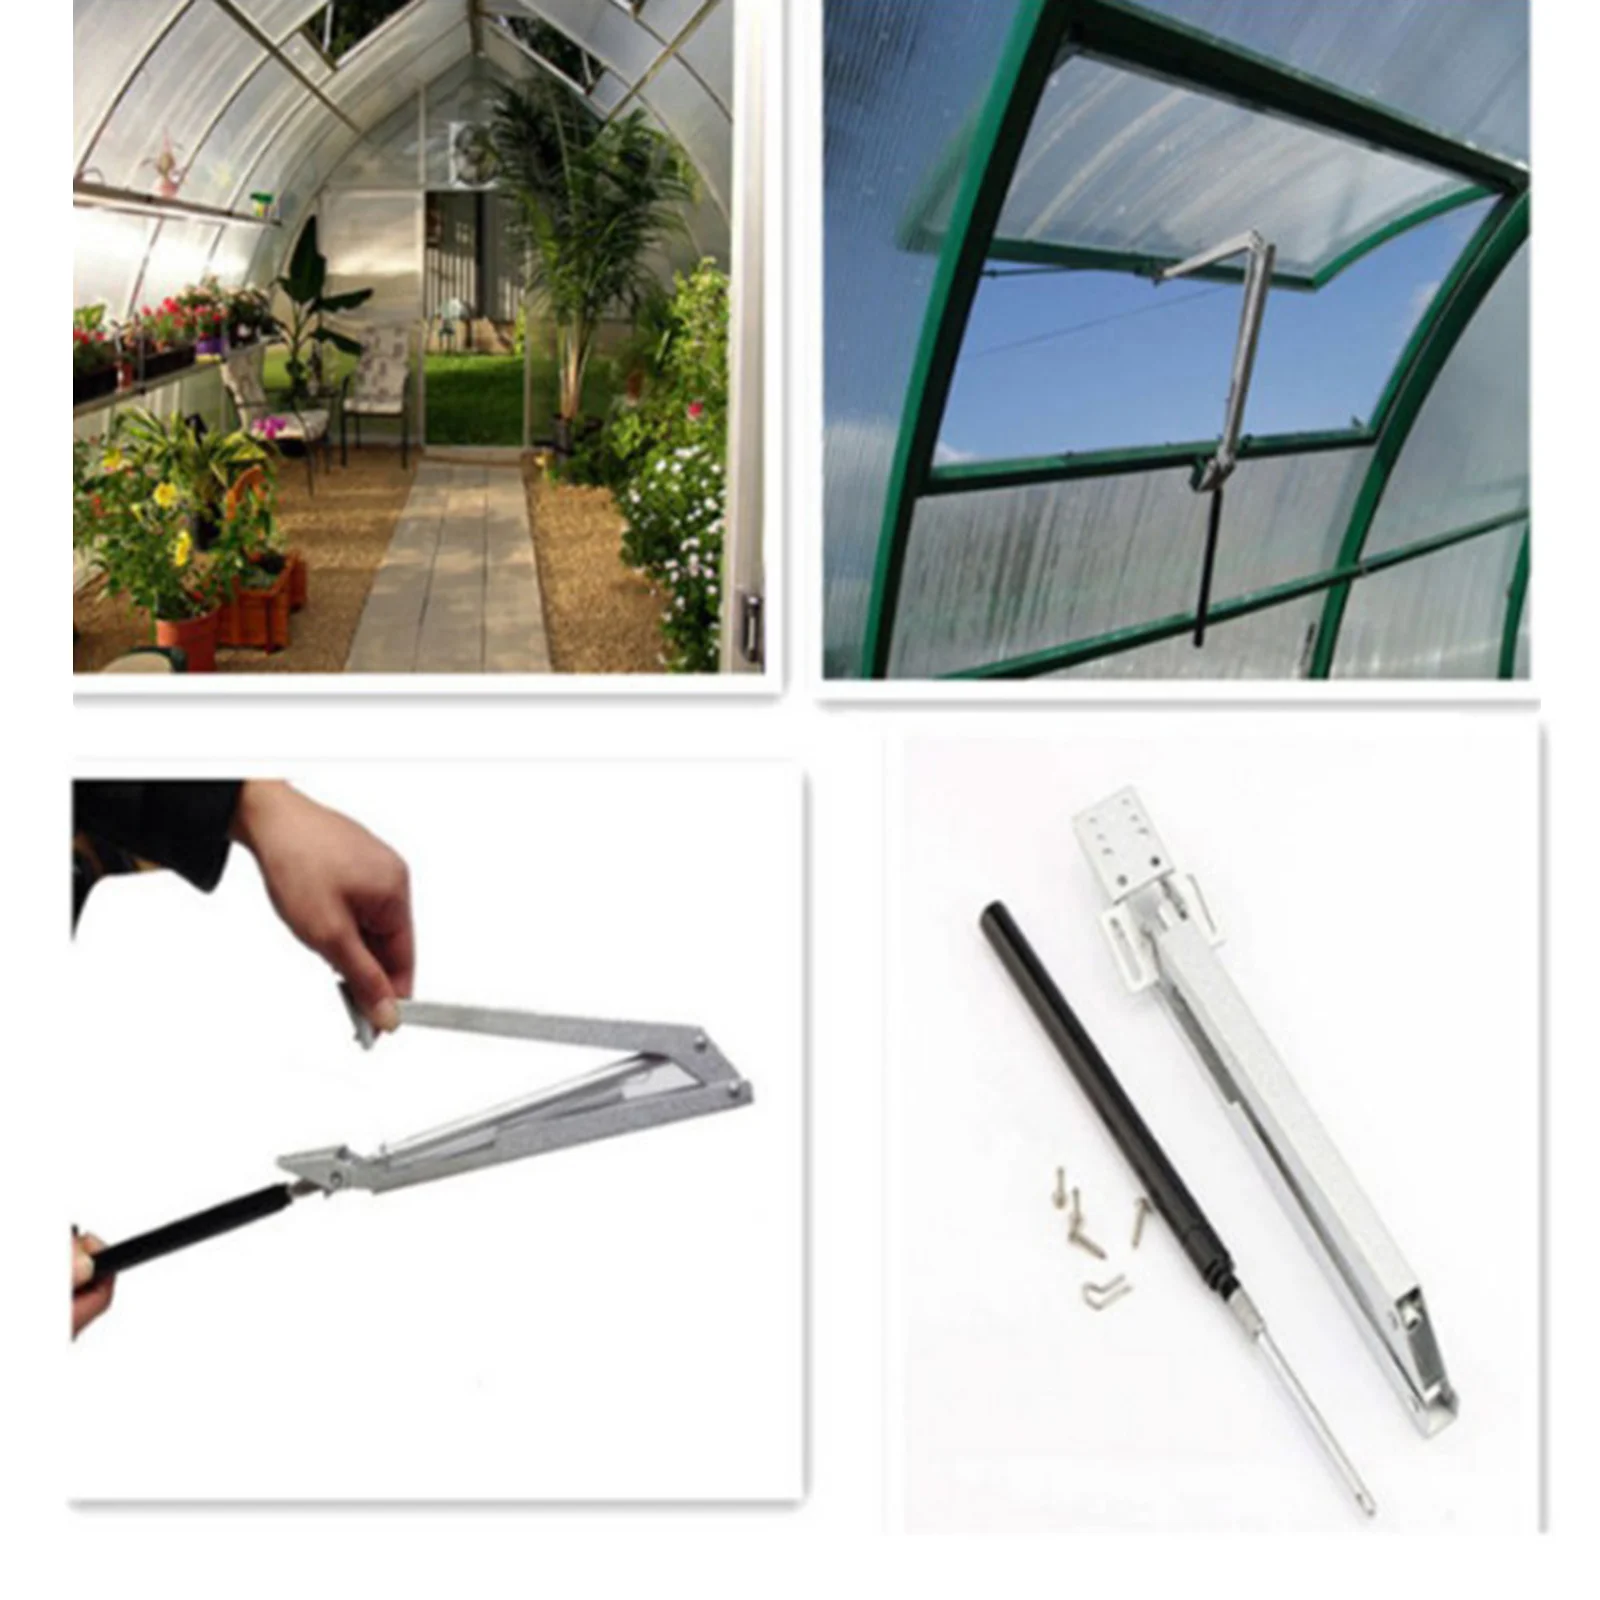 Automatic Greenhouse Window Opener Auto Ventilation Sensor Gardening Tools